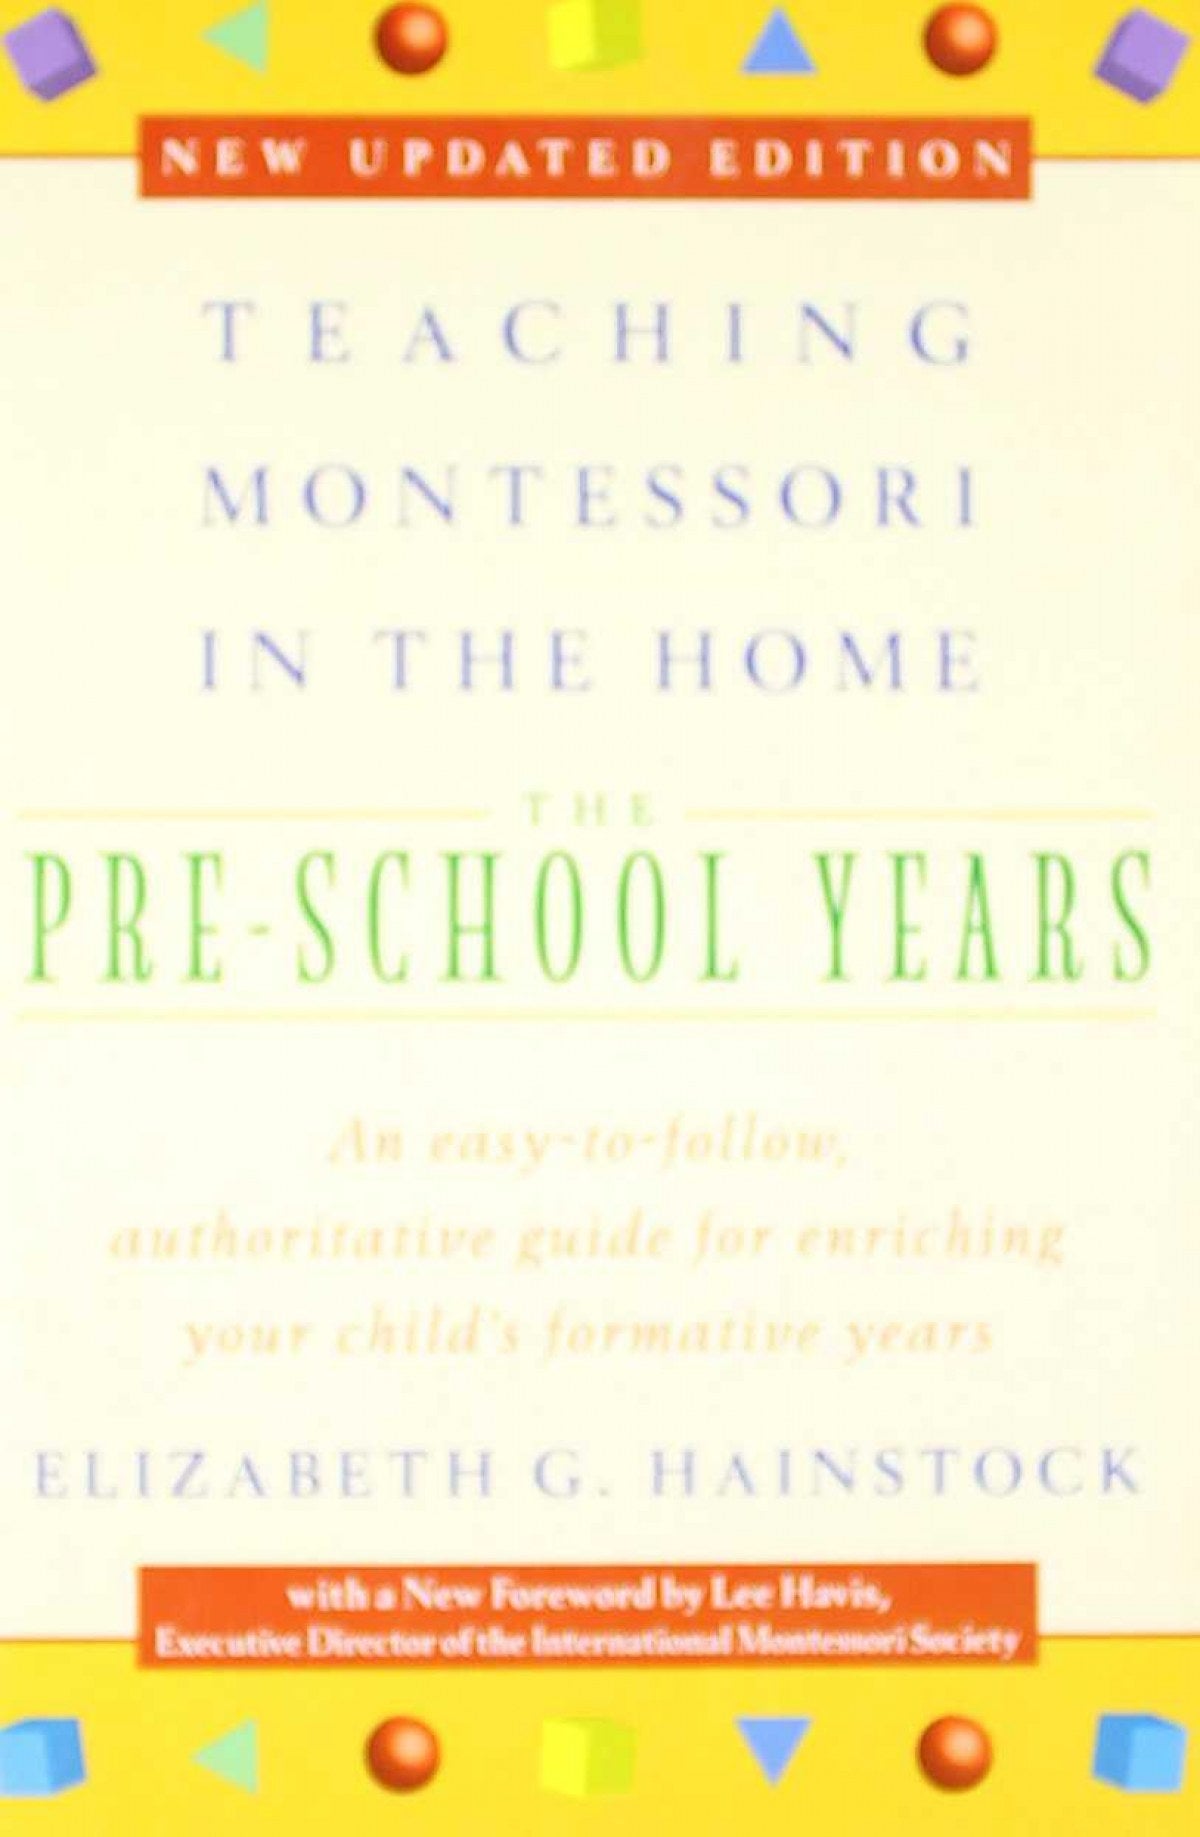 Teaching montessori in the home pre-school years |